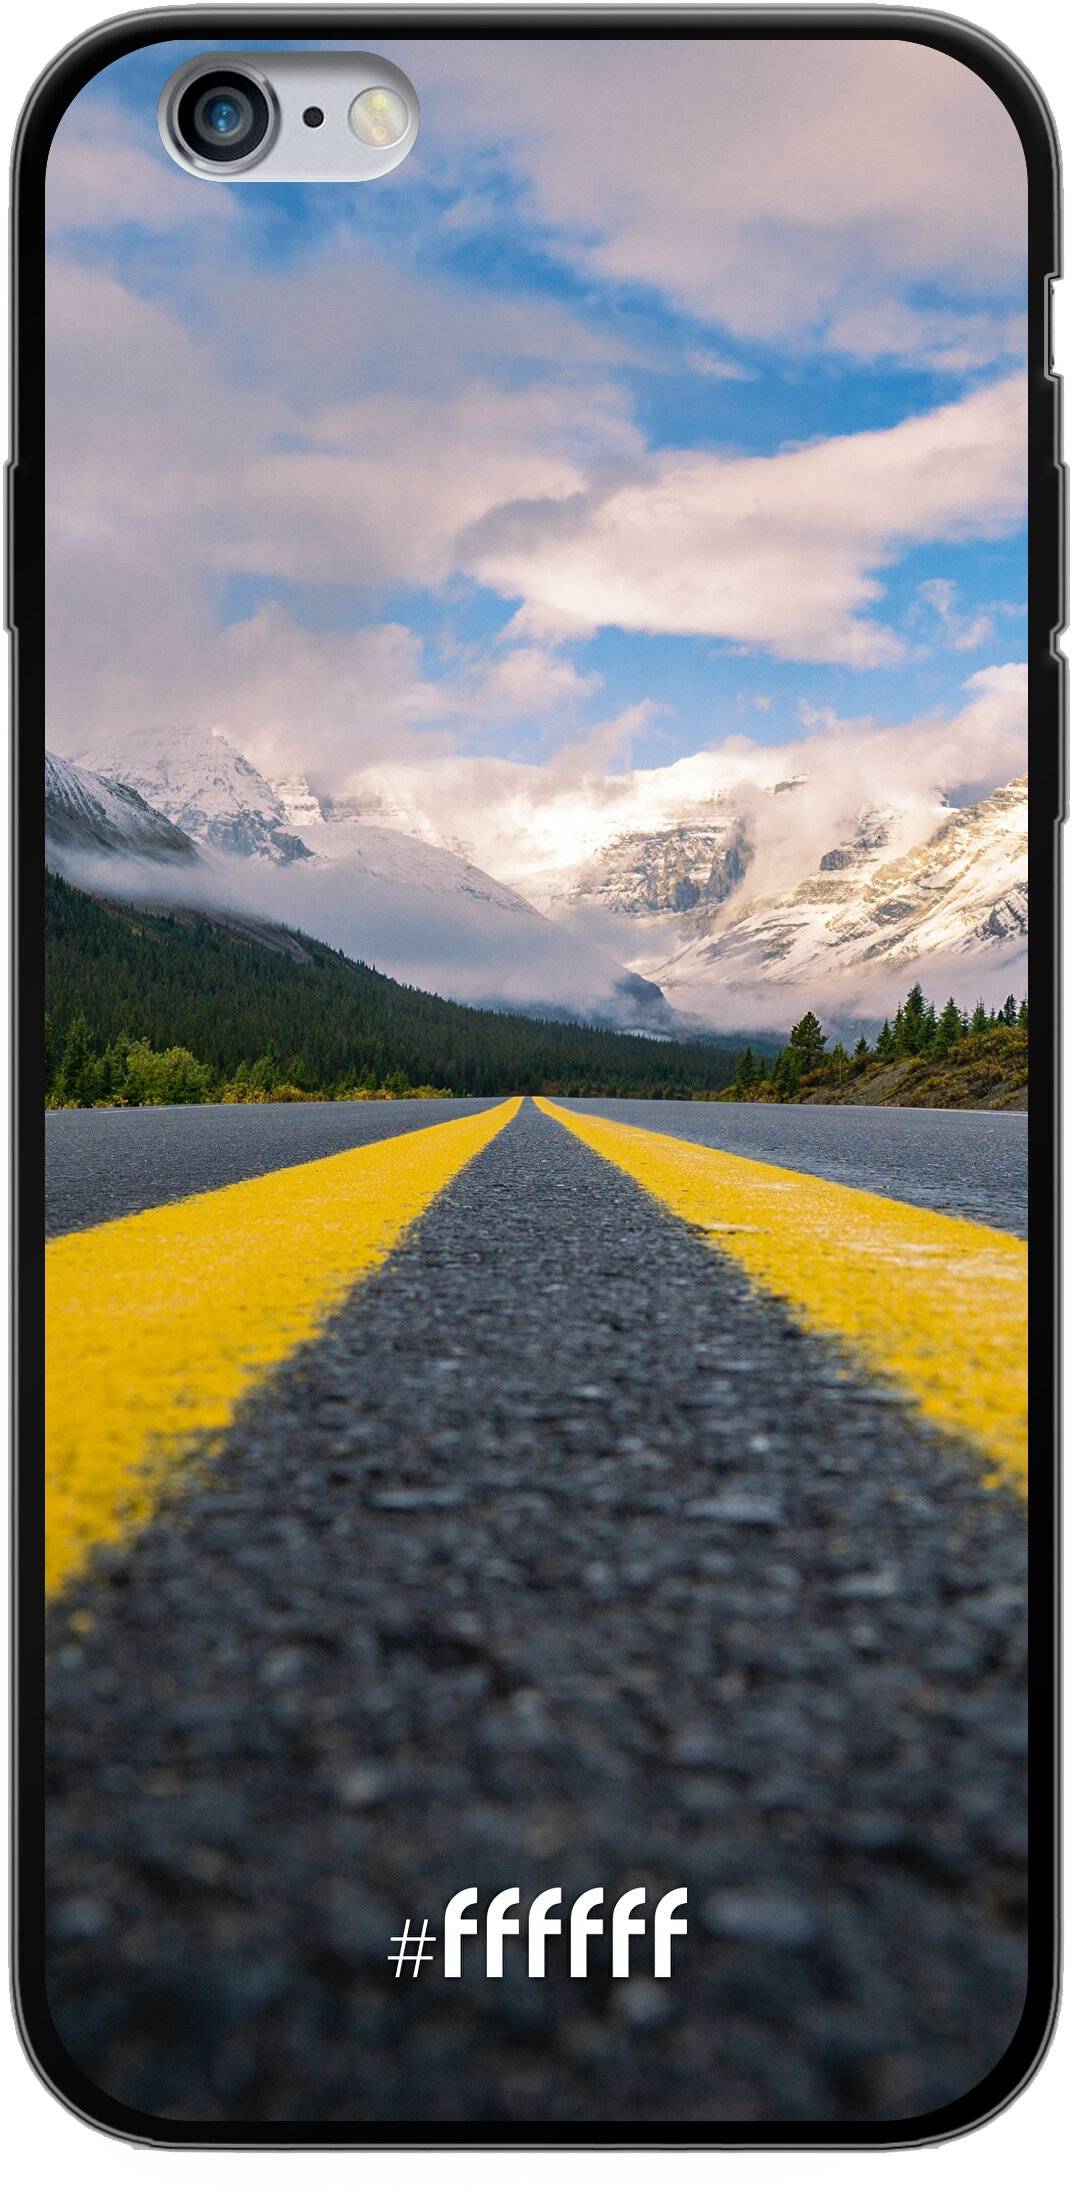 Road Ahead iPhone 6